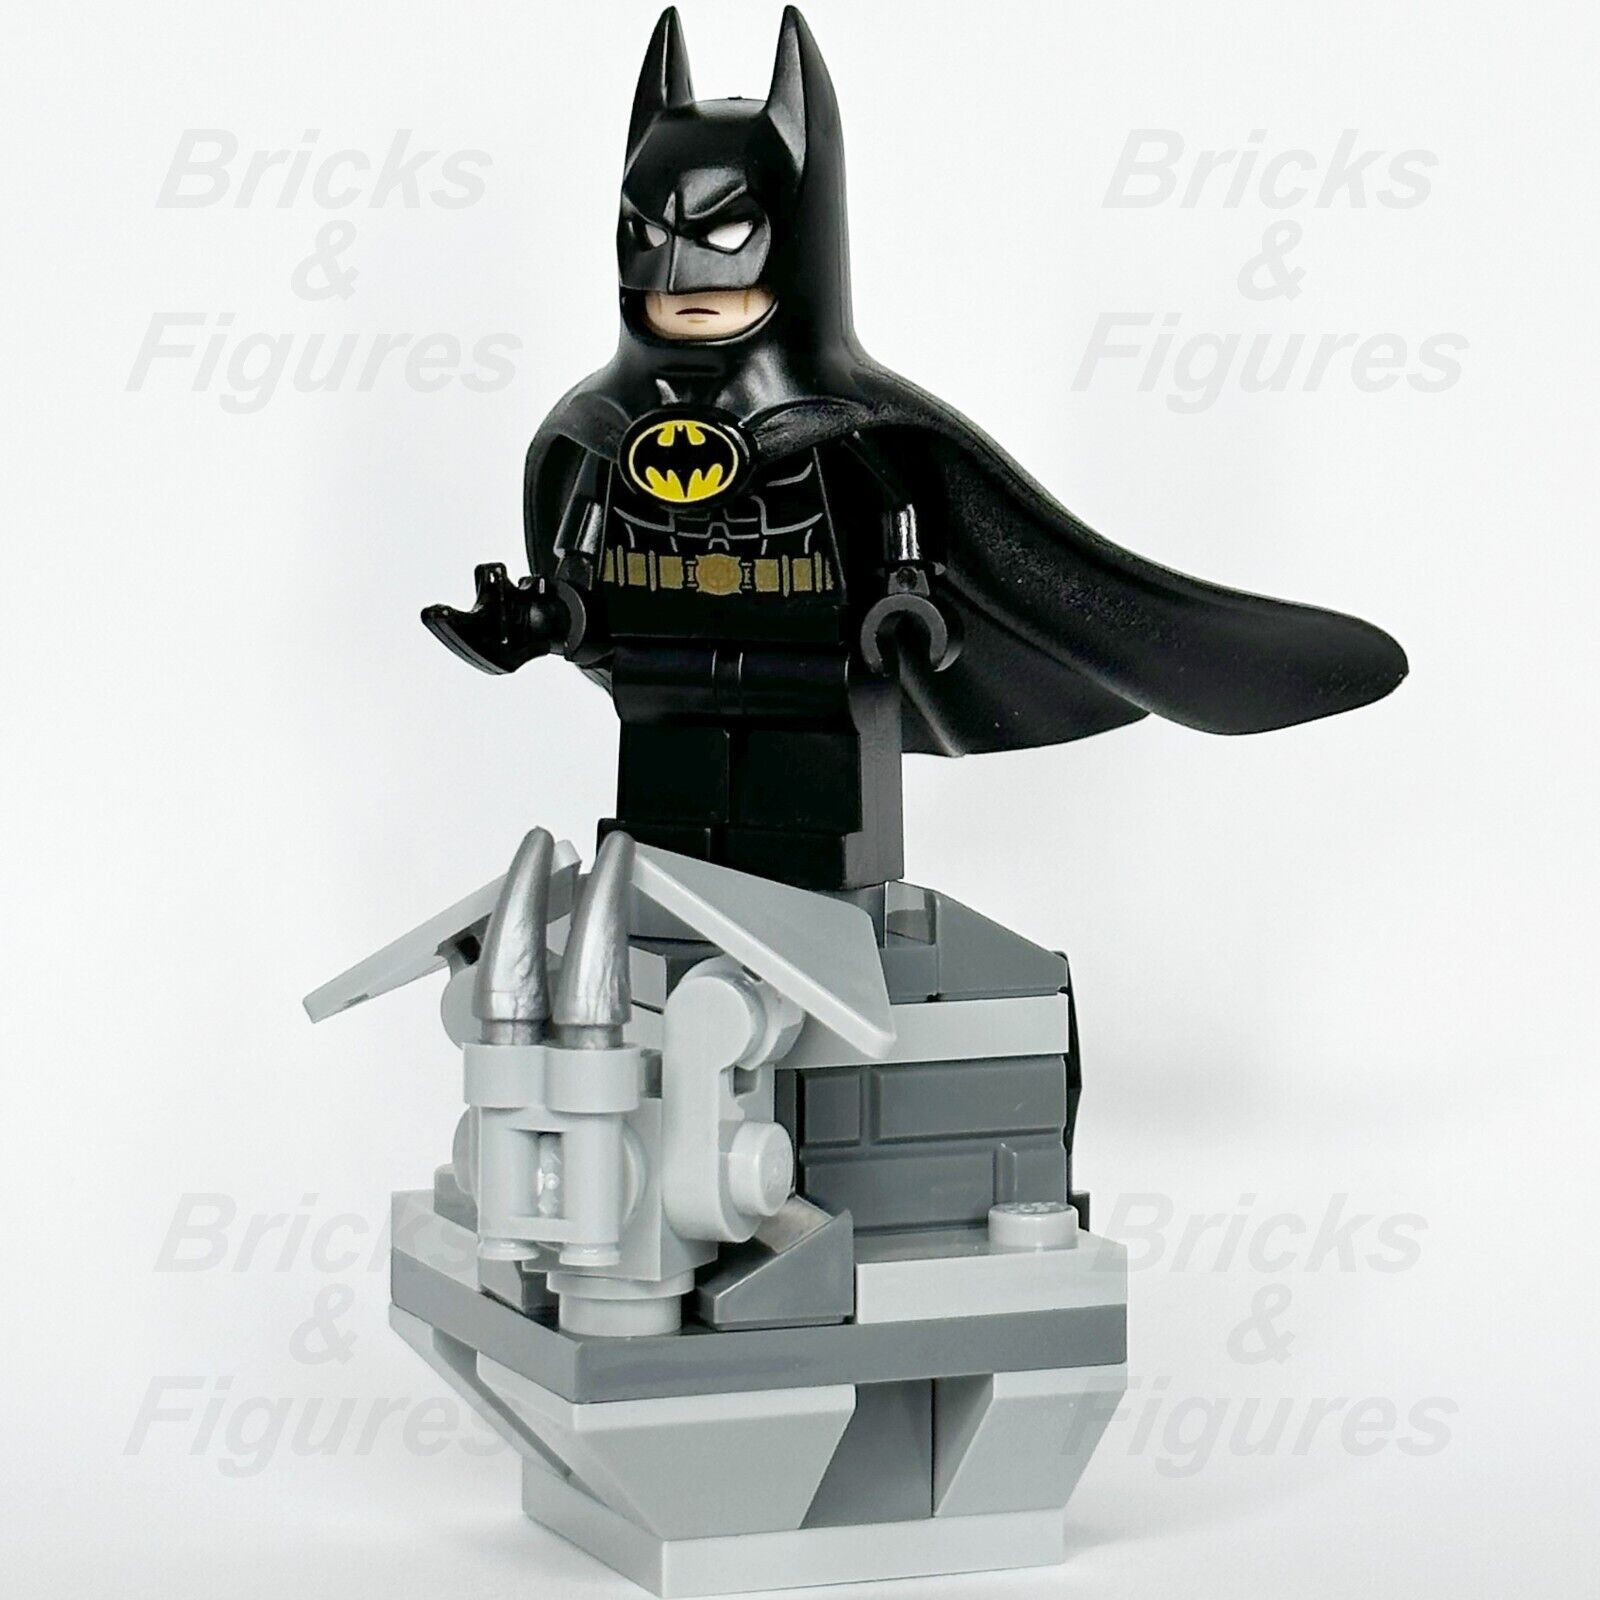 LEGO Super Heroes Batman 1992 Minifigure DC Tim Burton's Batman 30653 sh880 1